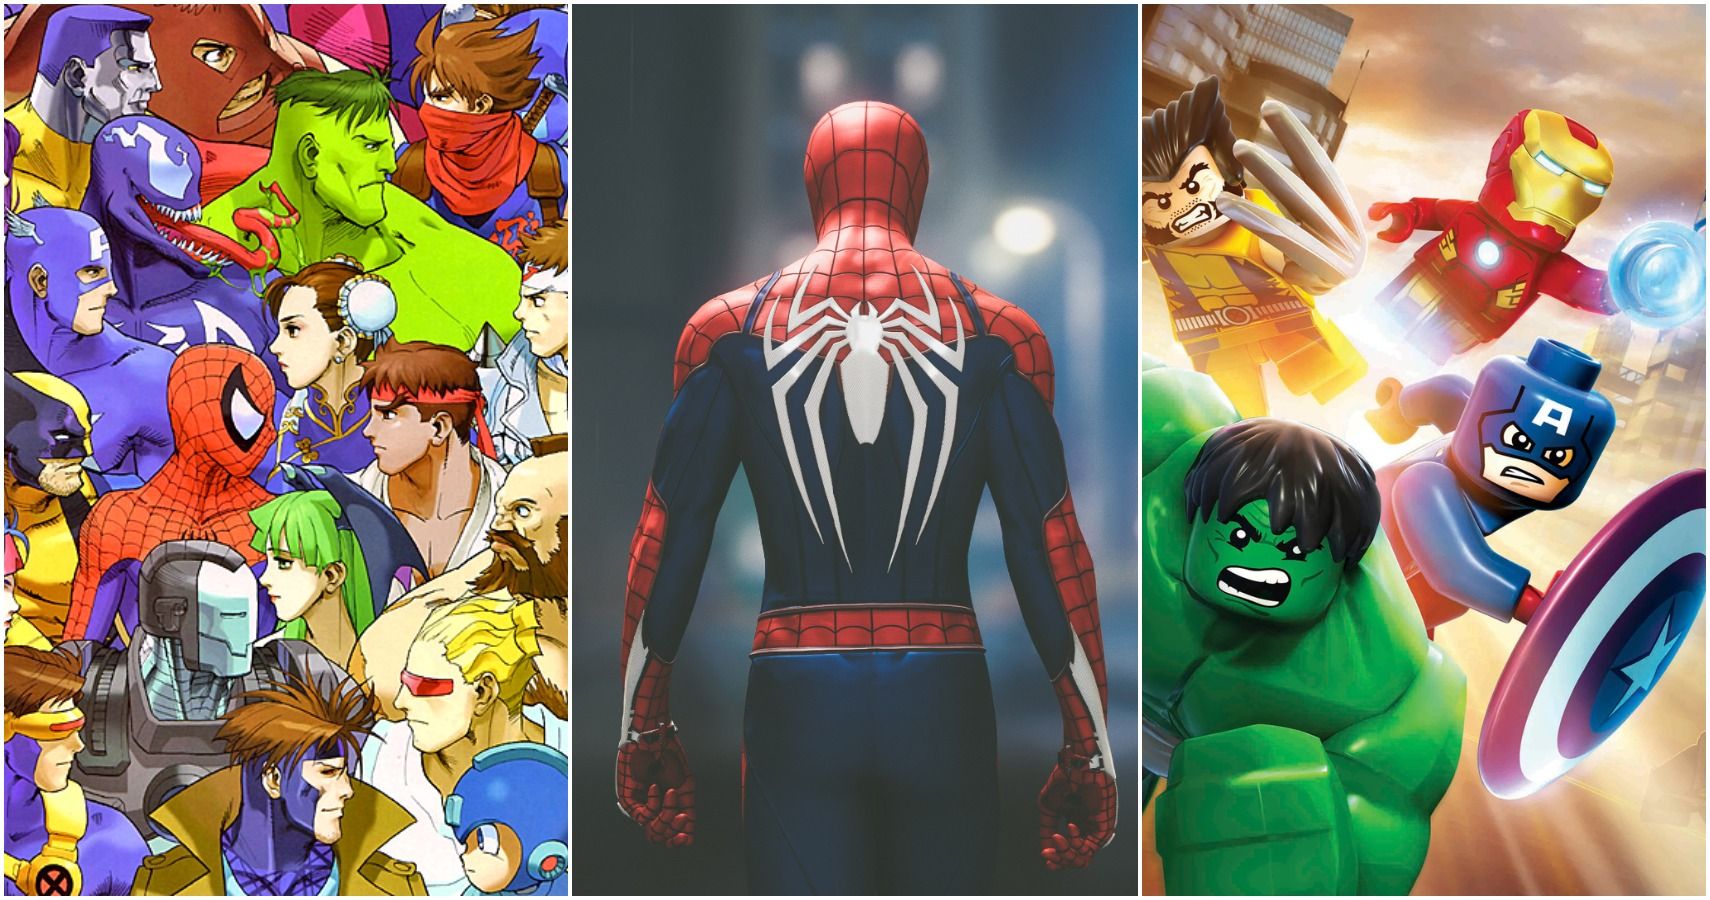 Spider-Man 2 Is The Third Best Superhero Game On Metacritic